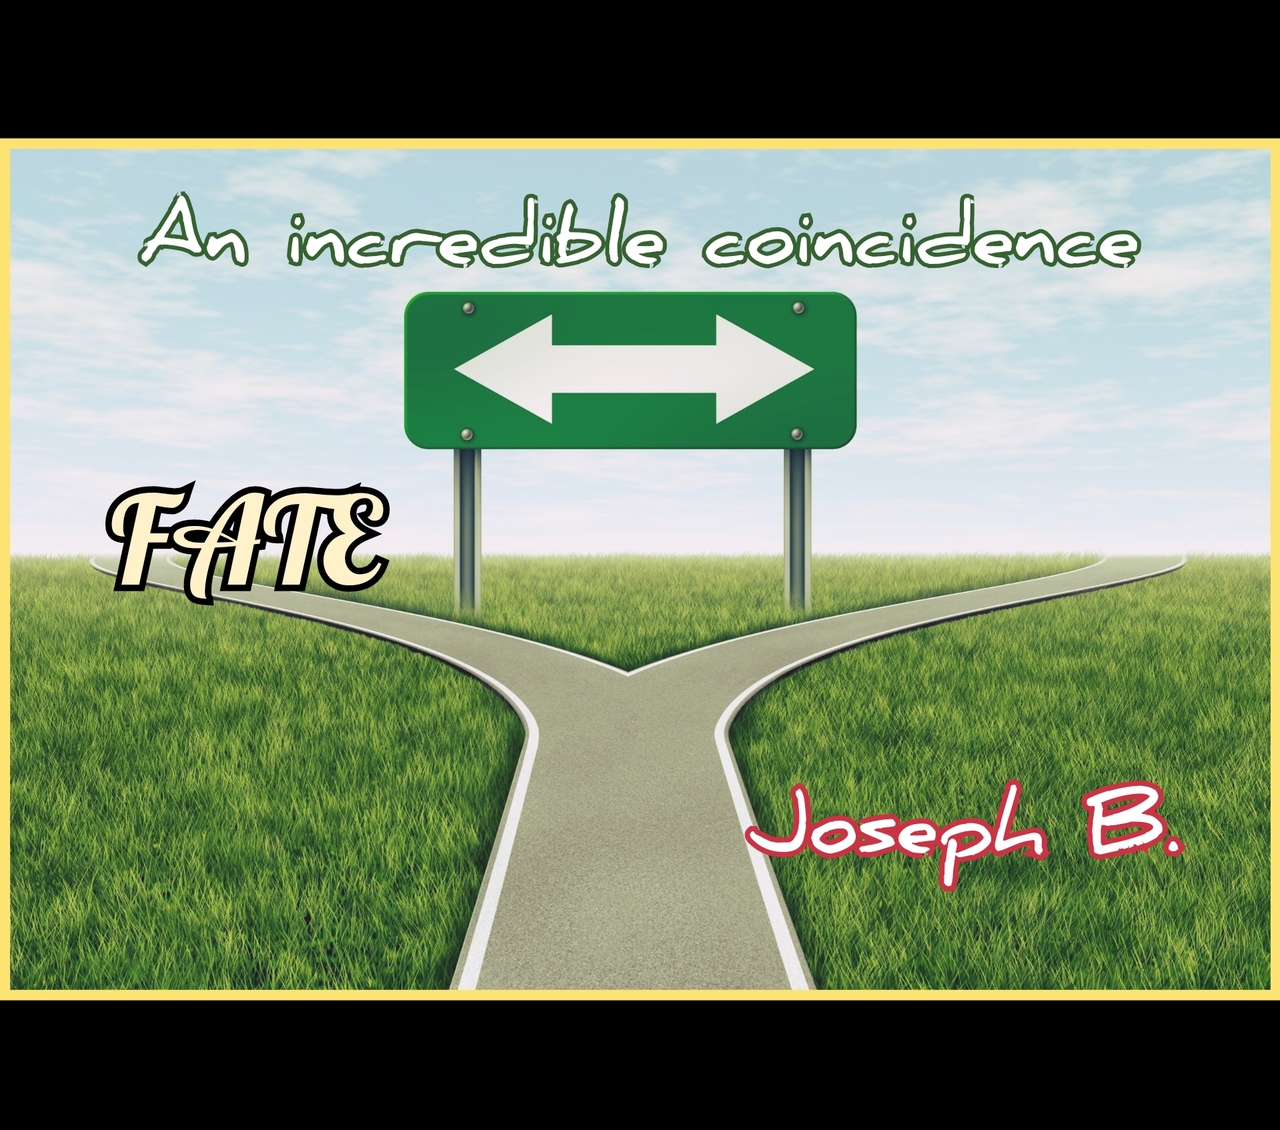 FATE by Joseph B. (MP4 Video Download)